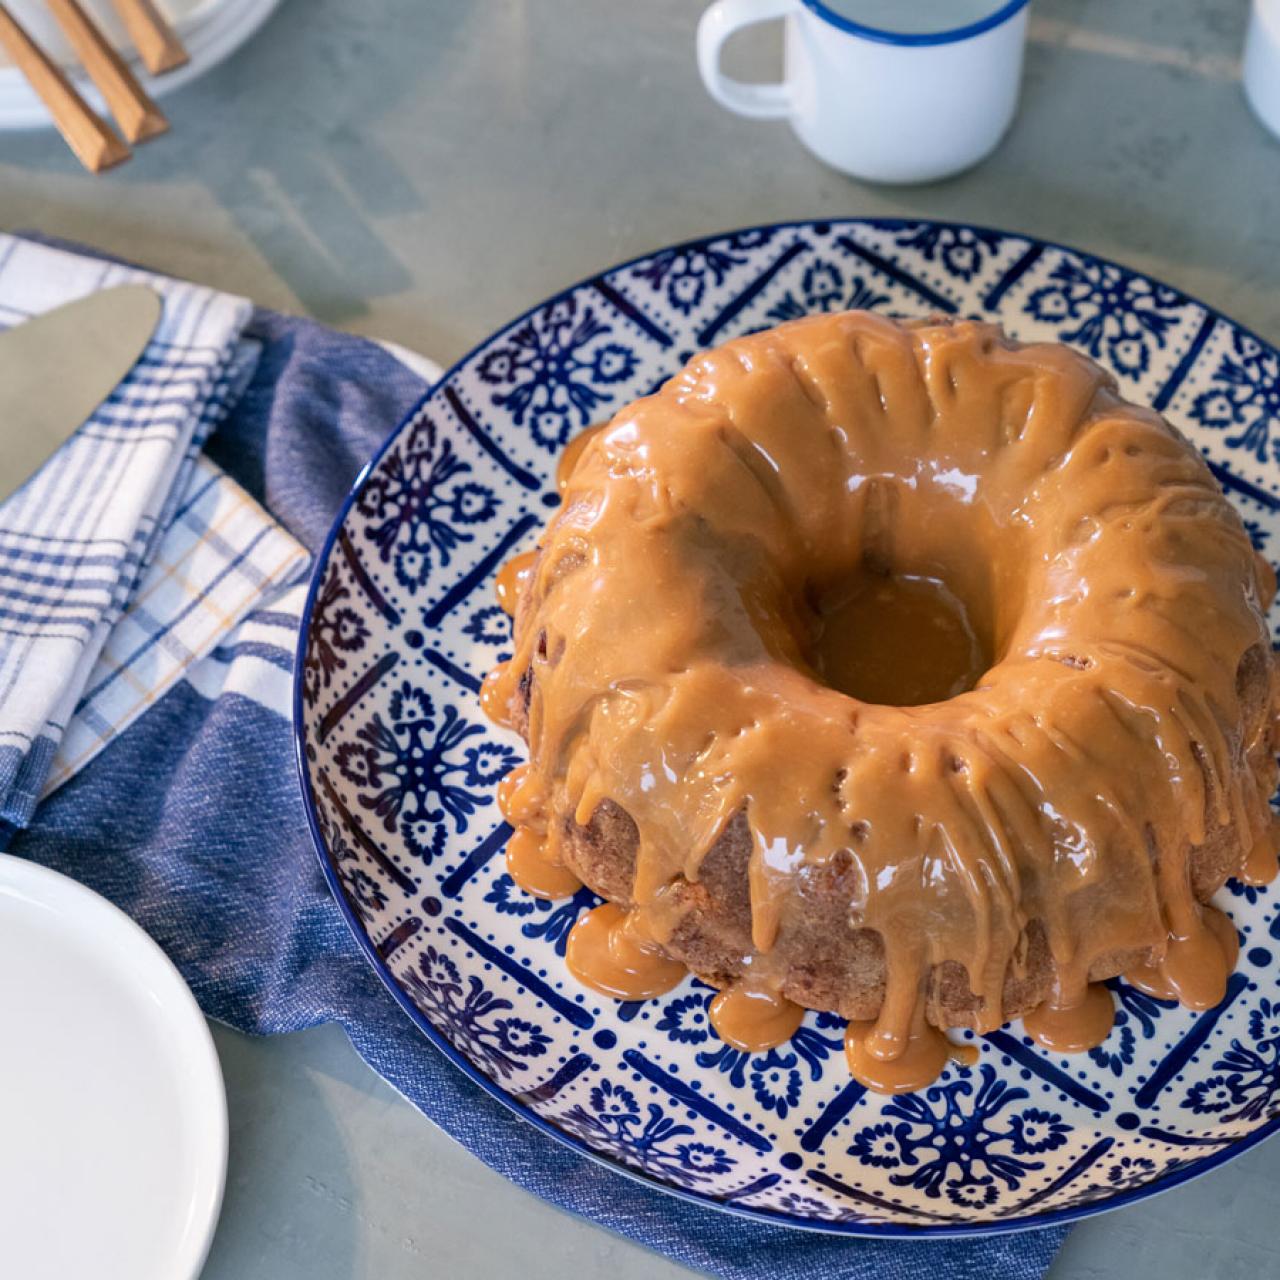 Homemade Caramel Apple Cake Perfect for Fall Baking - XO, Katie Rosario